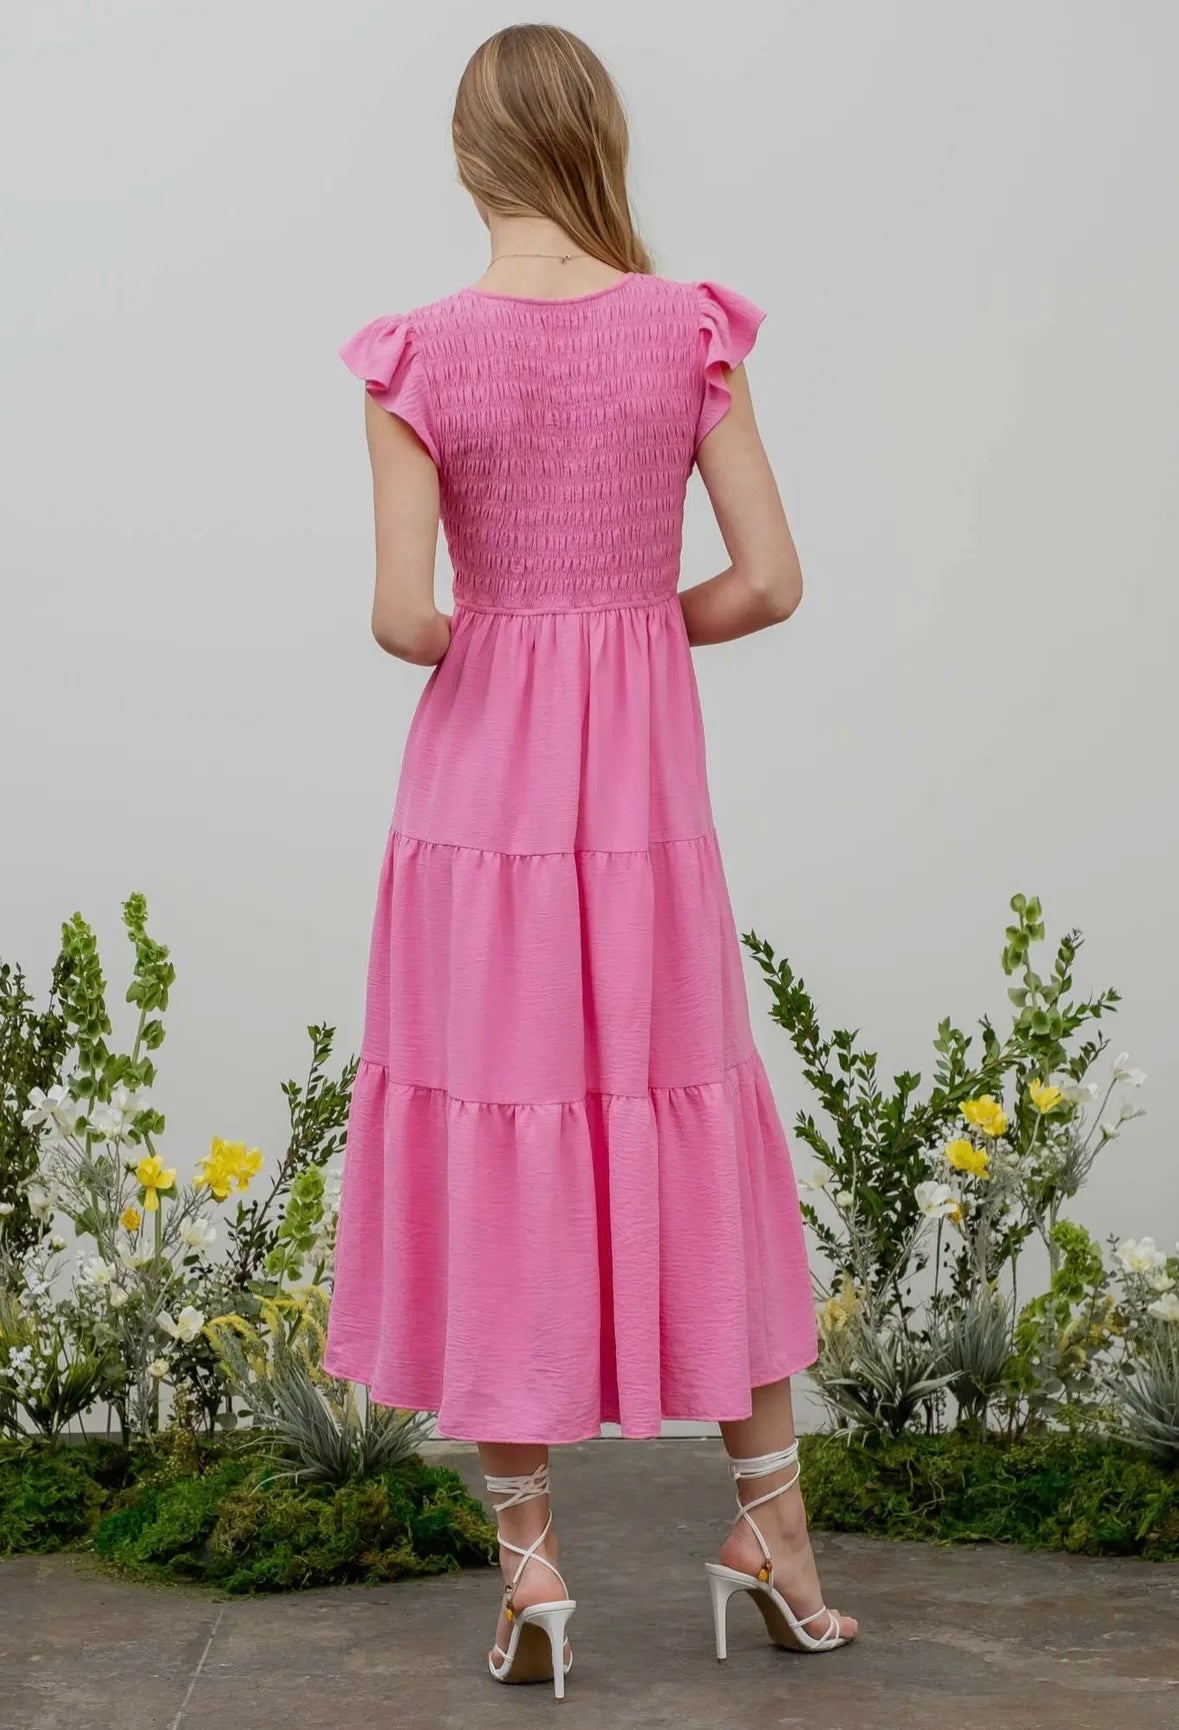 The Ashleigh Dress